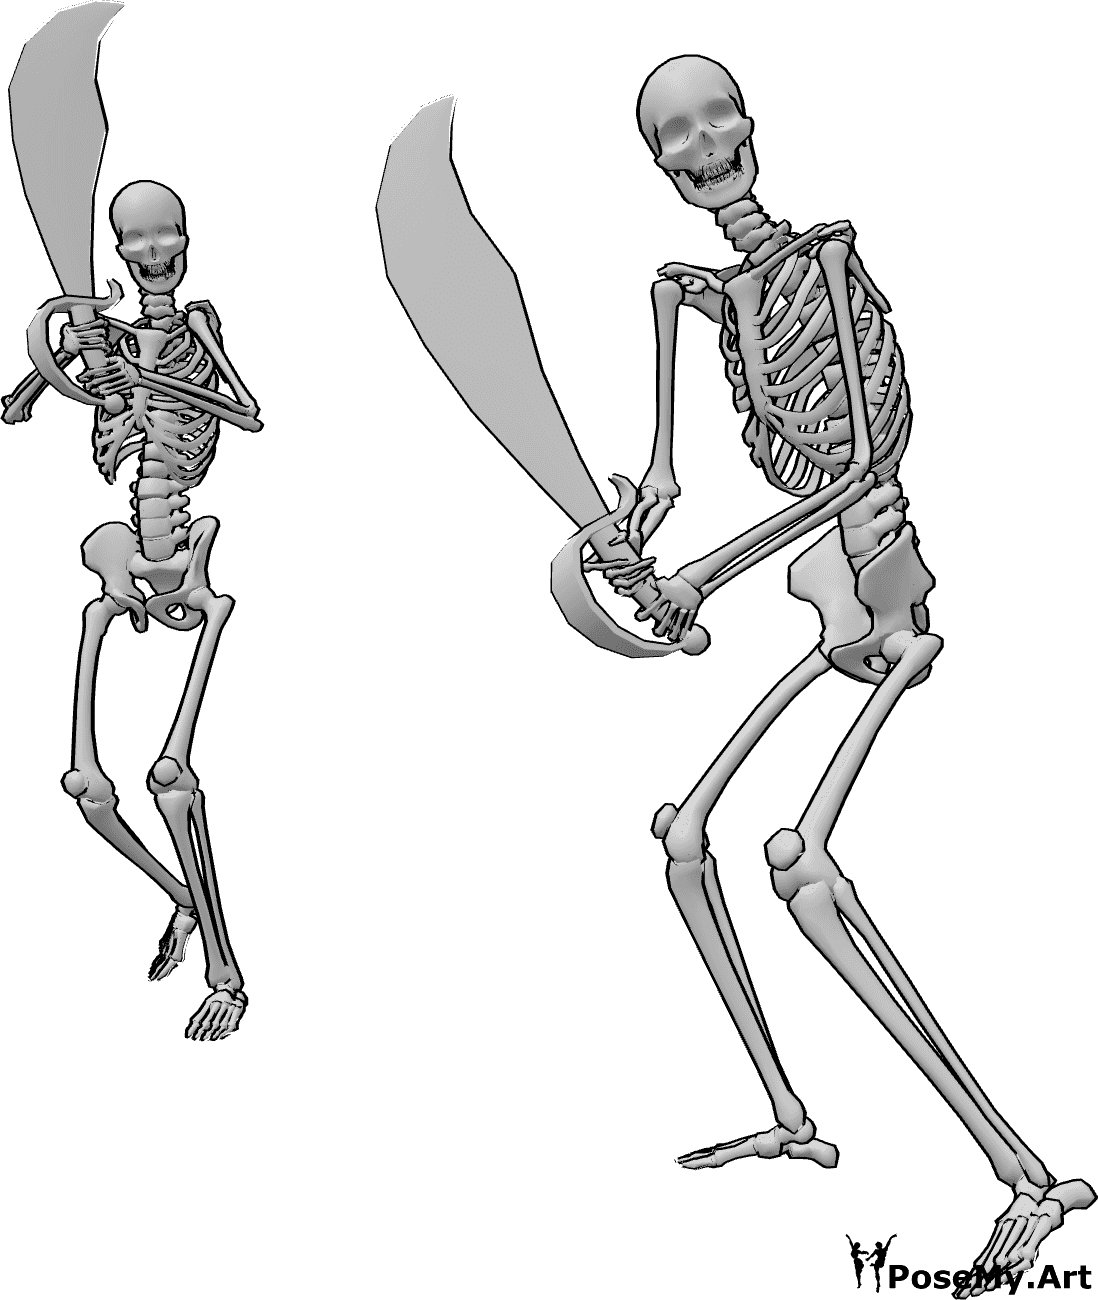 Pose Reference- Skeletons swords attack pose - Two skeletons with swords ready to attack pose